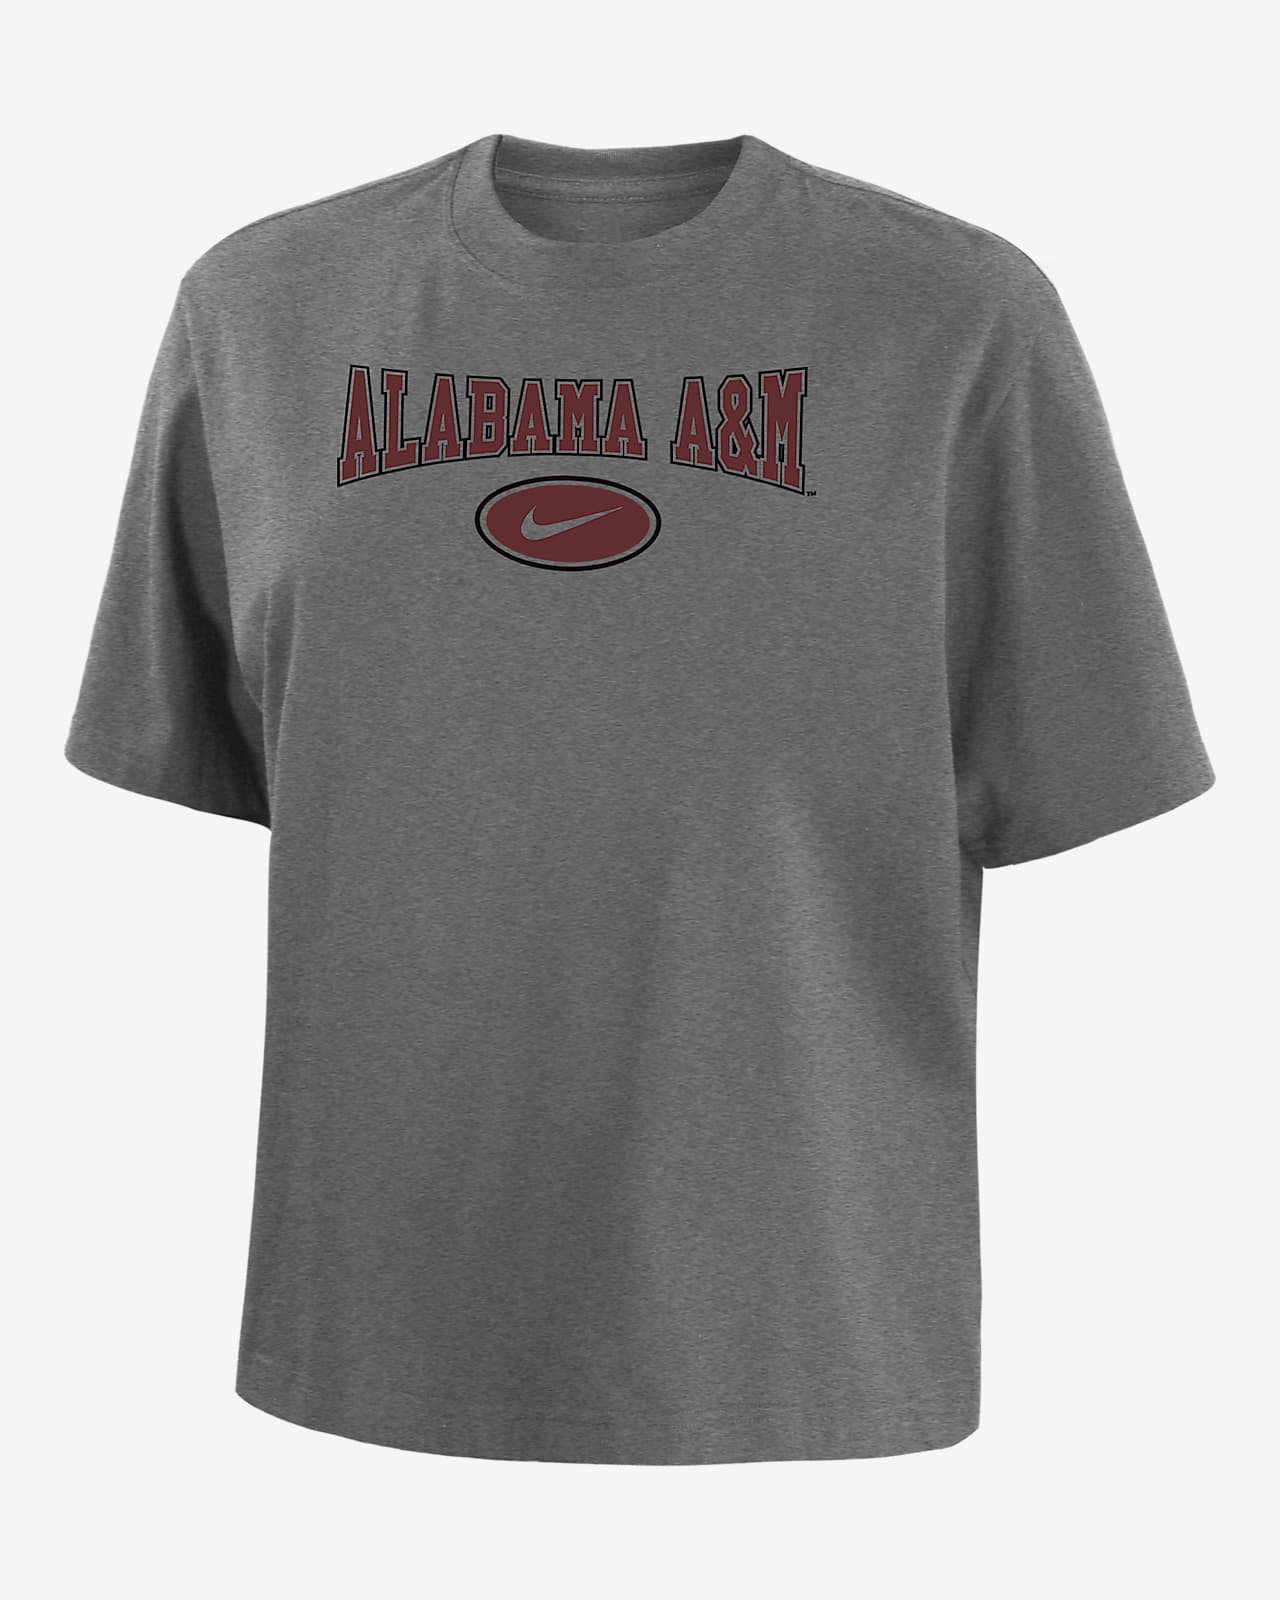 Alabama A&M Women's Nike College Boxy T-Shirt